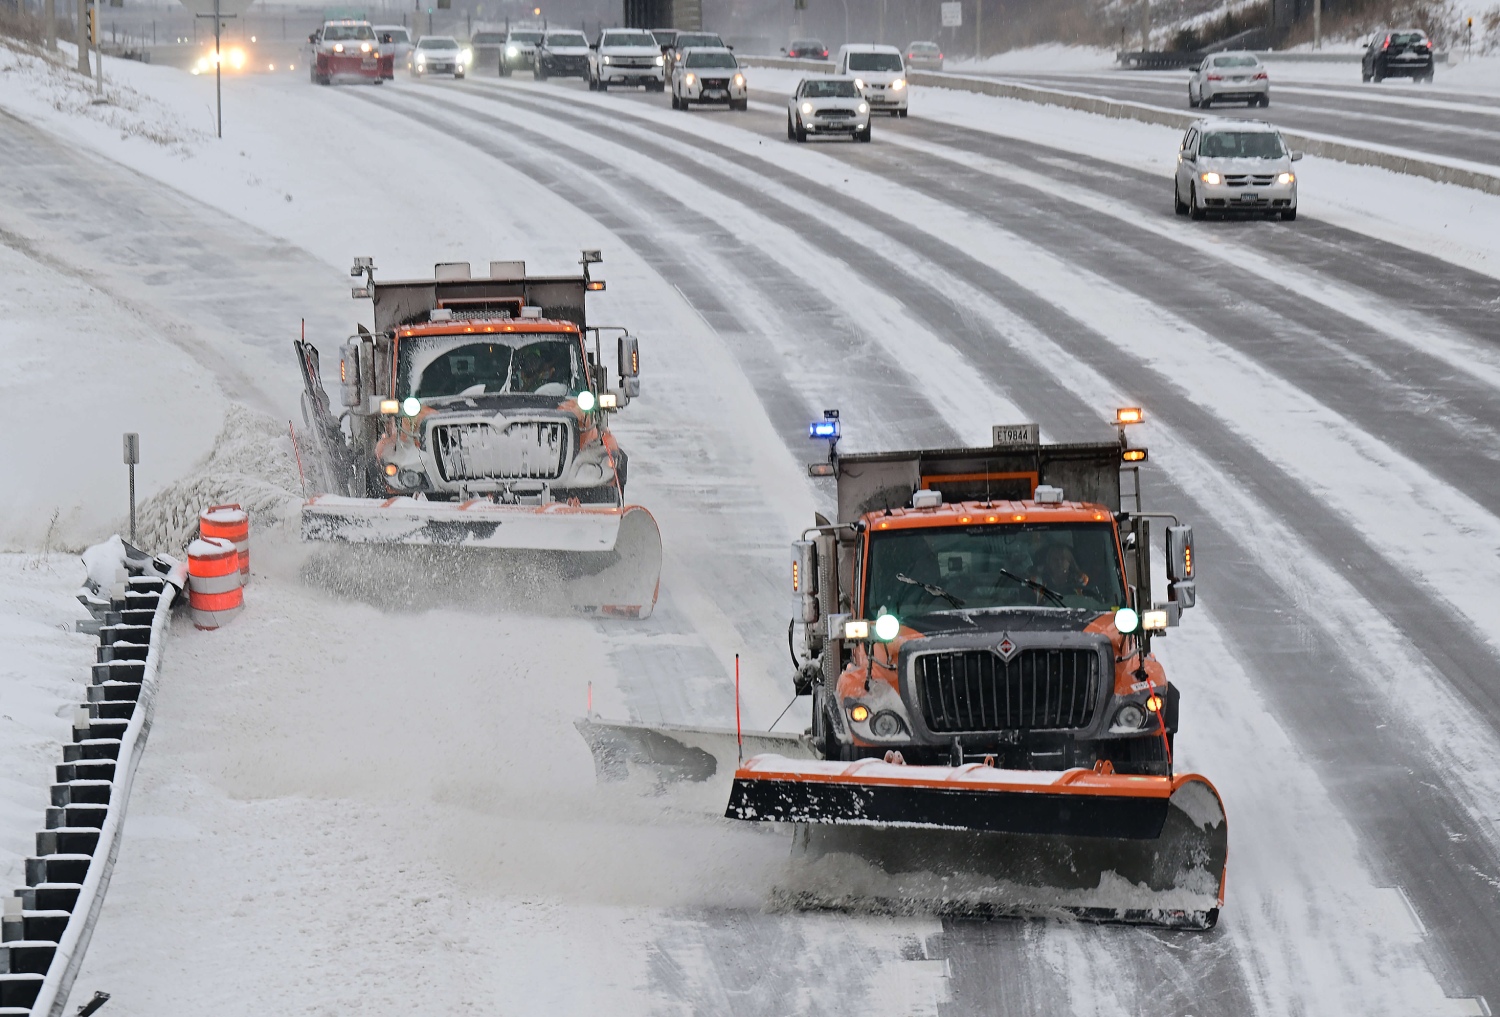 Minnesota's new snowplows working hard on the highway